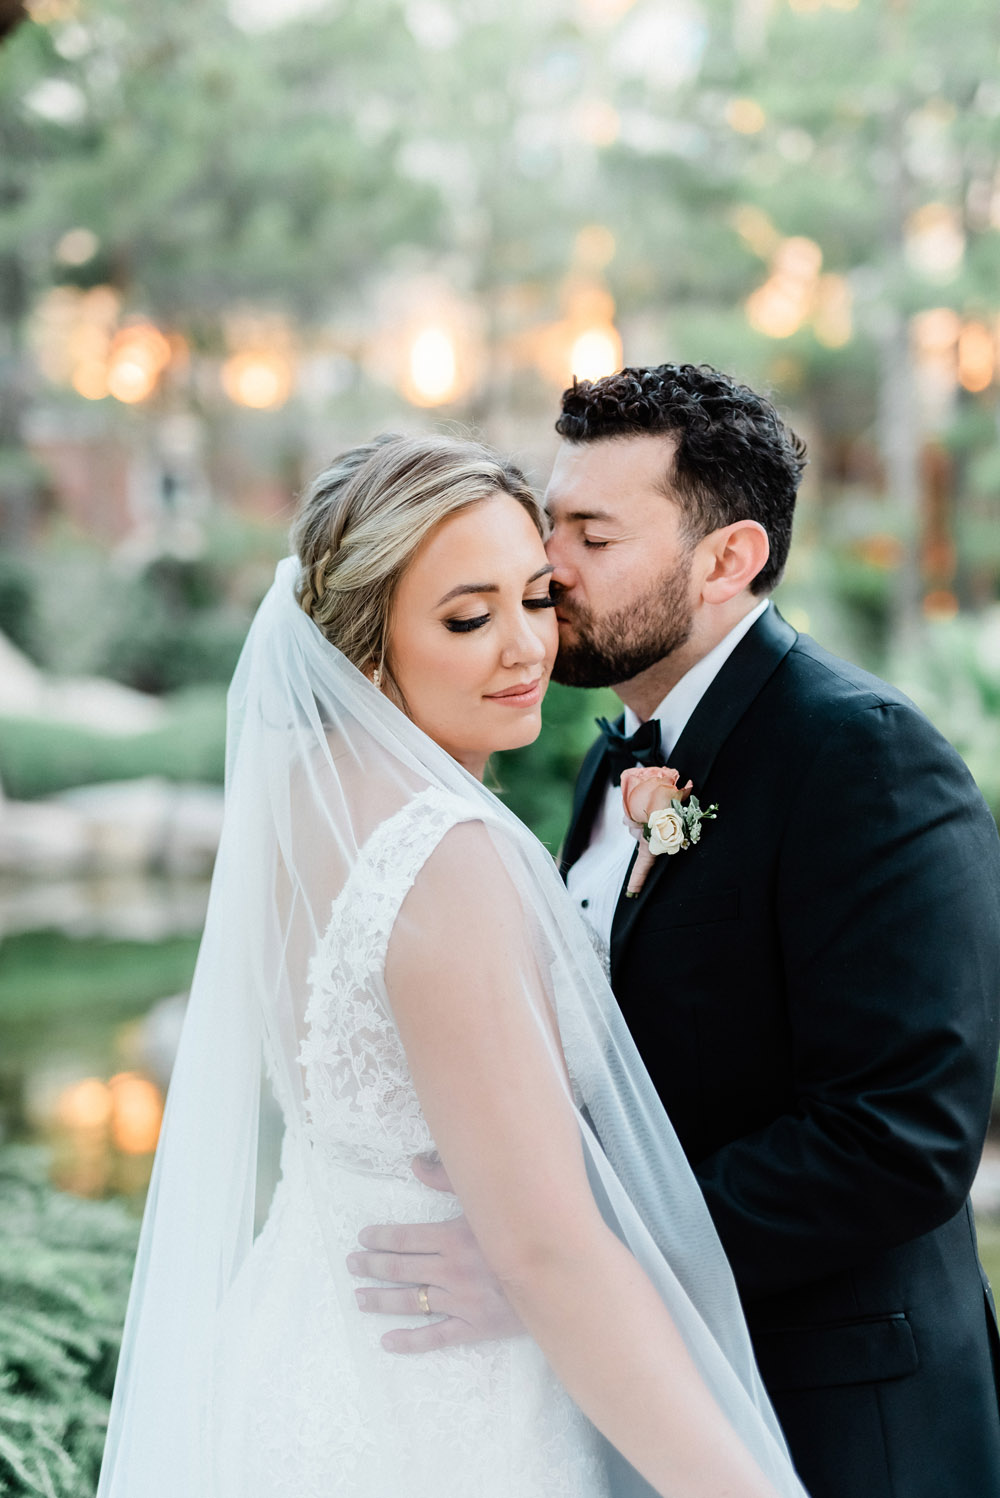 JW Marriott Las Vegas Wedding Photography | Kristen Marie Weddings + Portraits